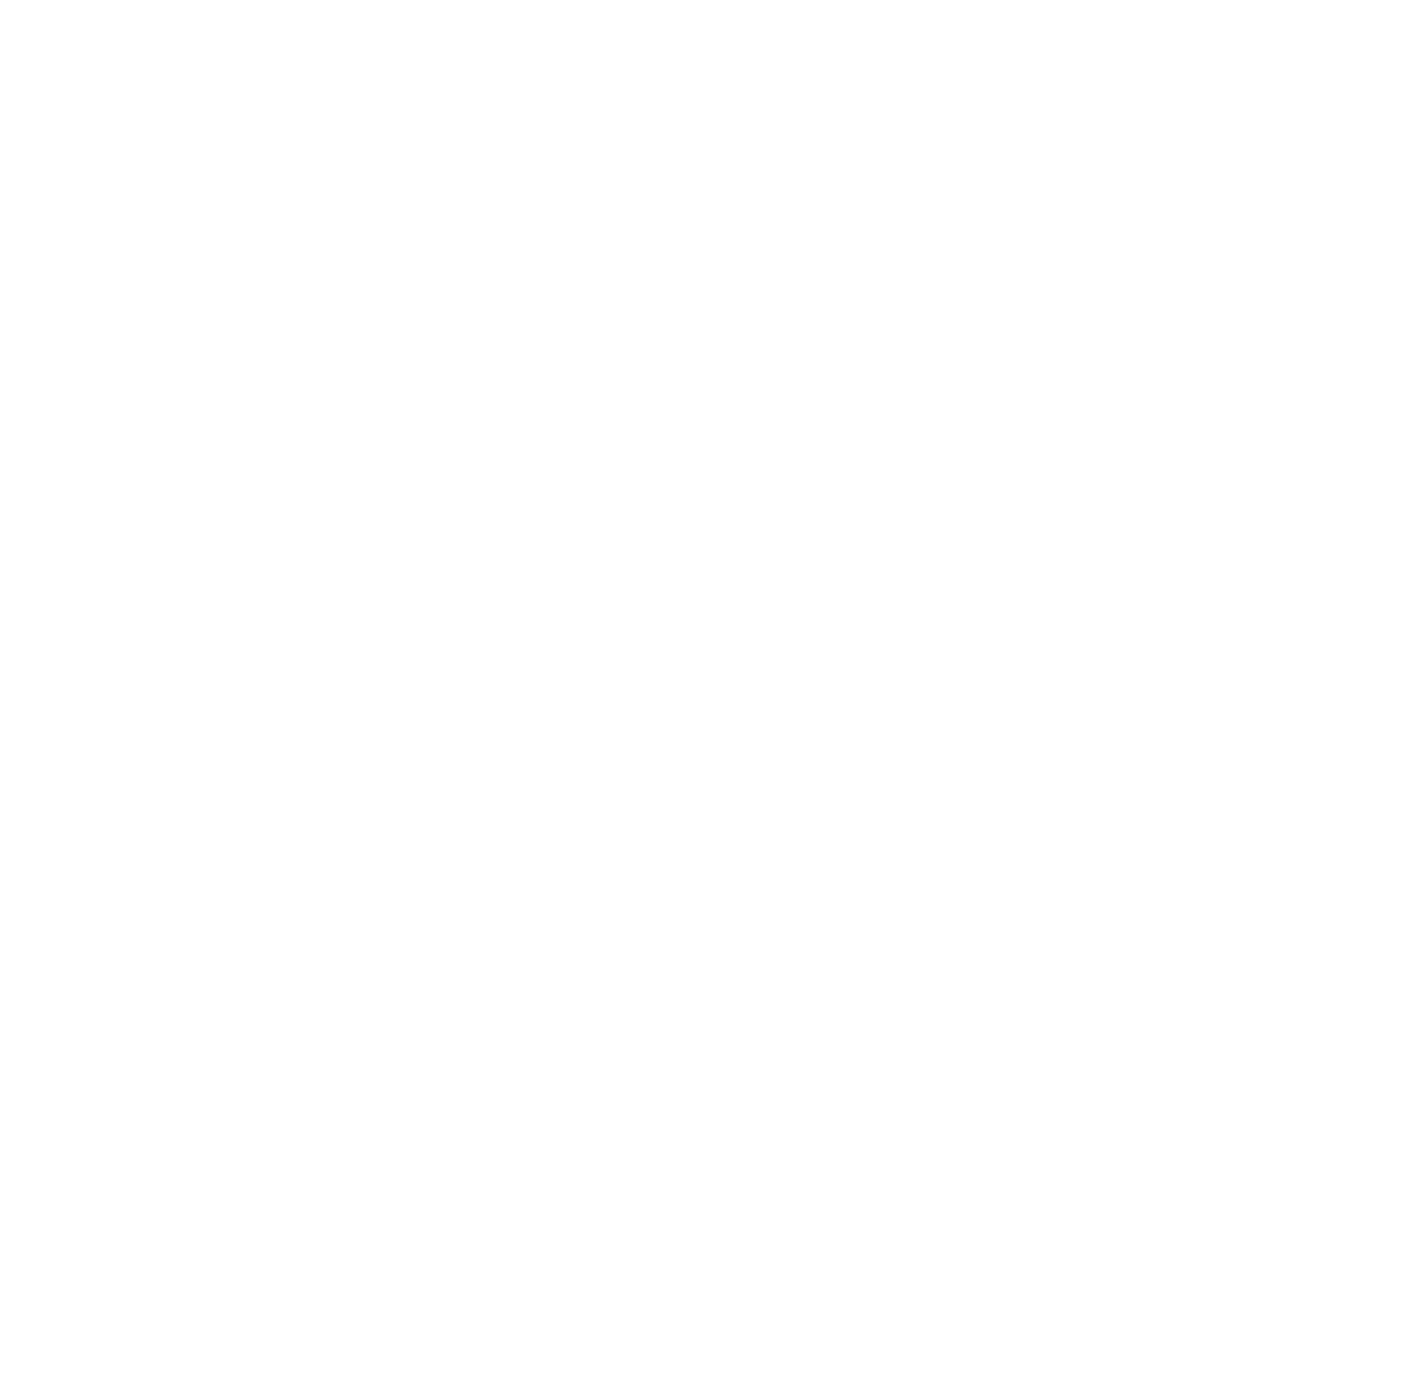 
																							SIMELCAMX